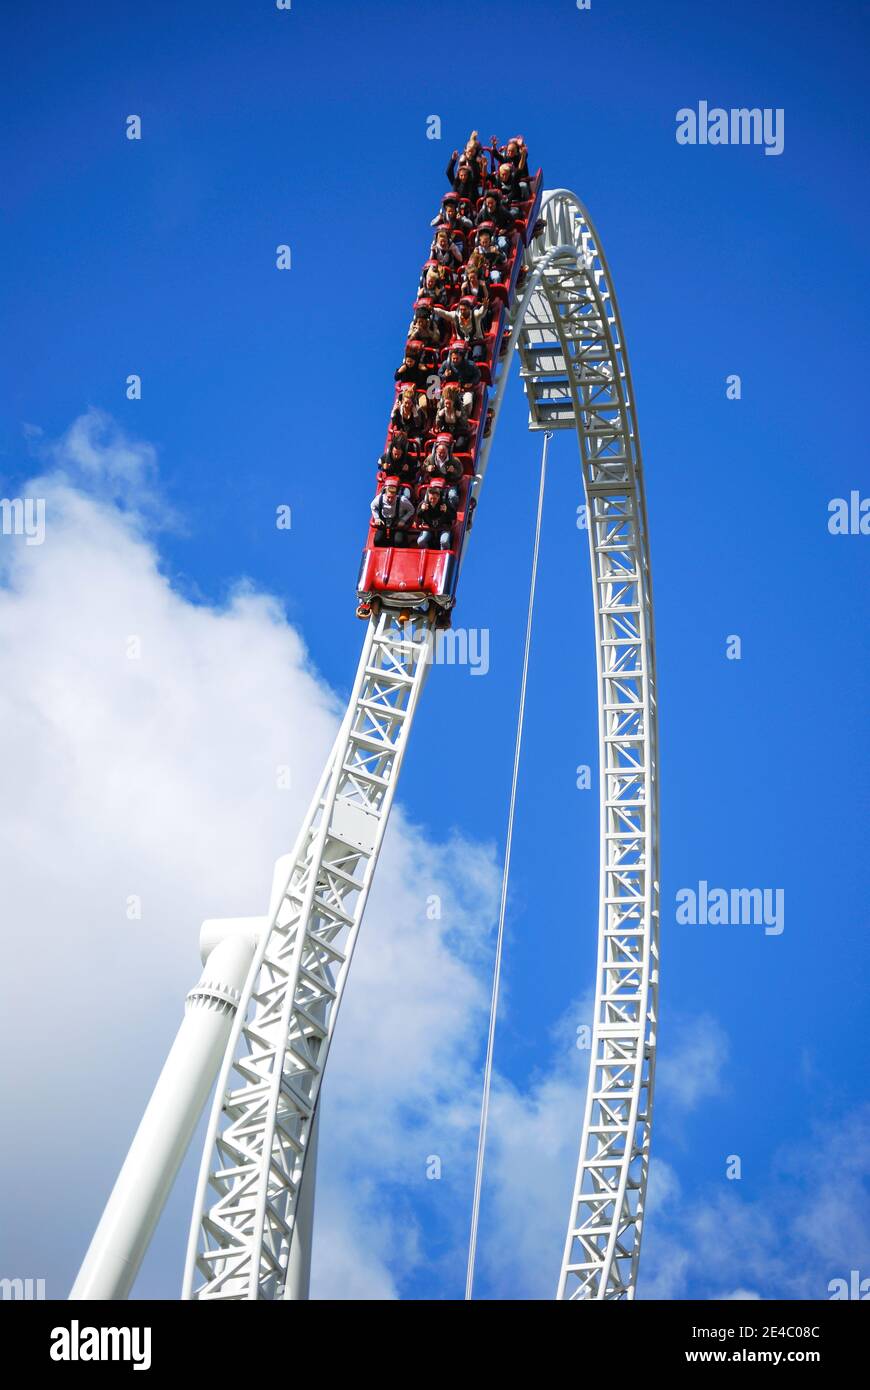 Stealth Ride, Amity Cove, Thorpe Park Theme Park, Chertsey, Surrey, UK England Stock Photo